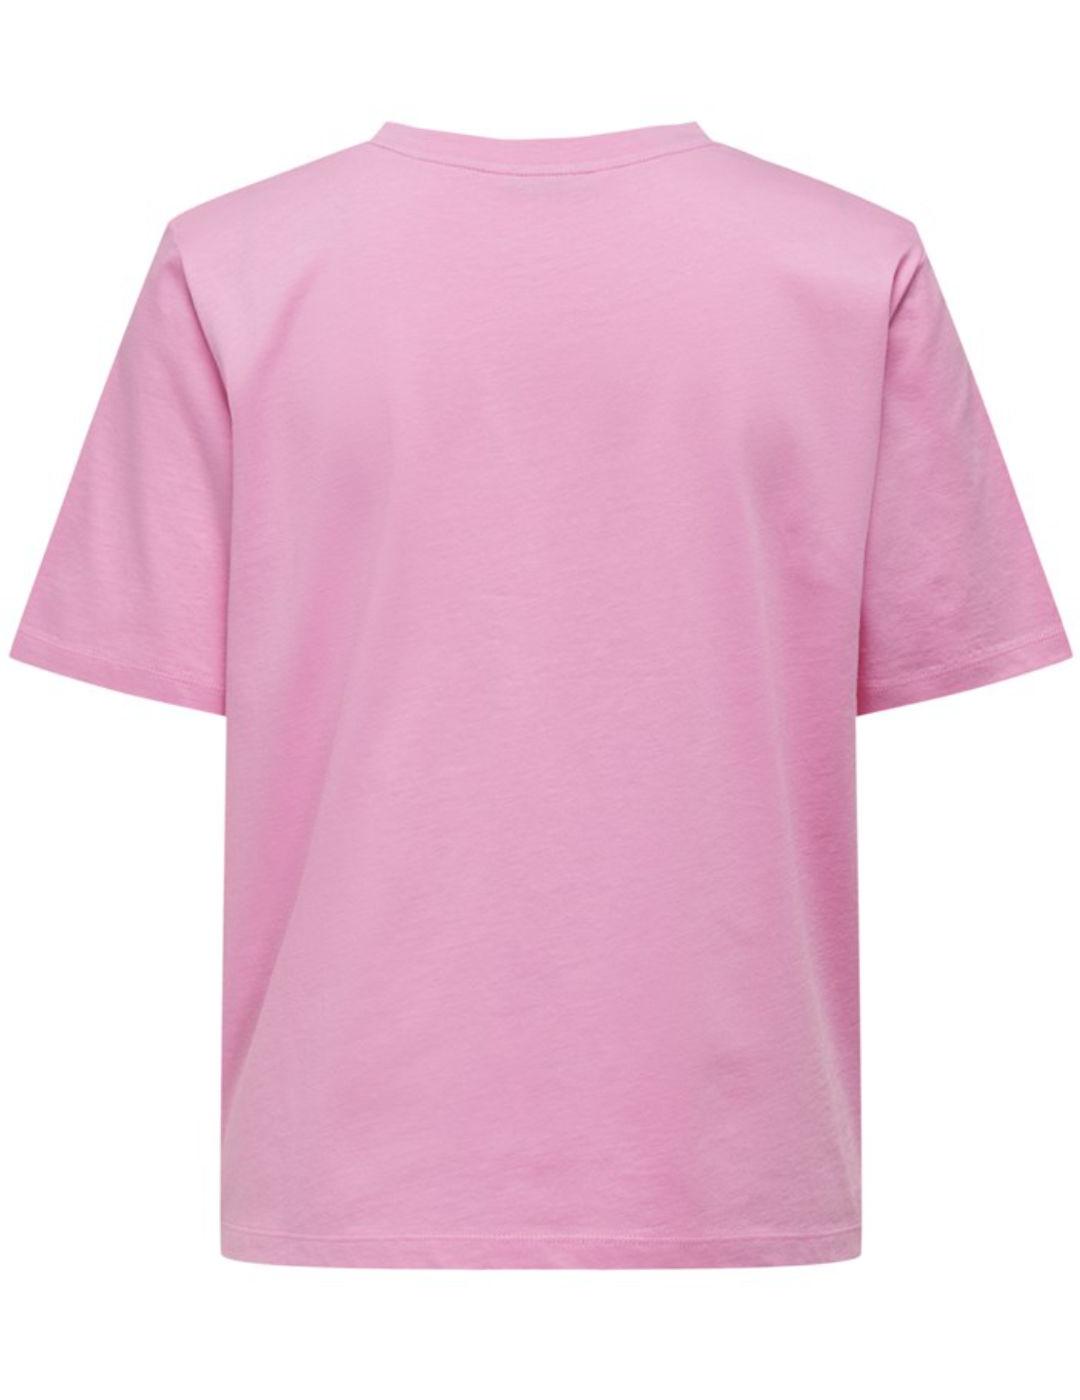 Camiseta Only rosa manga corta para mujer